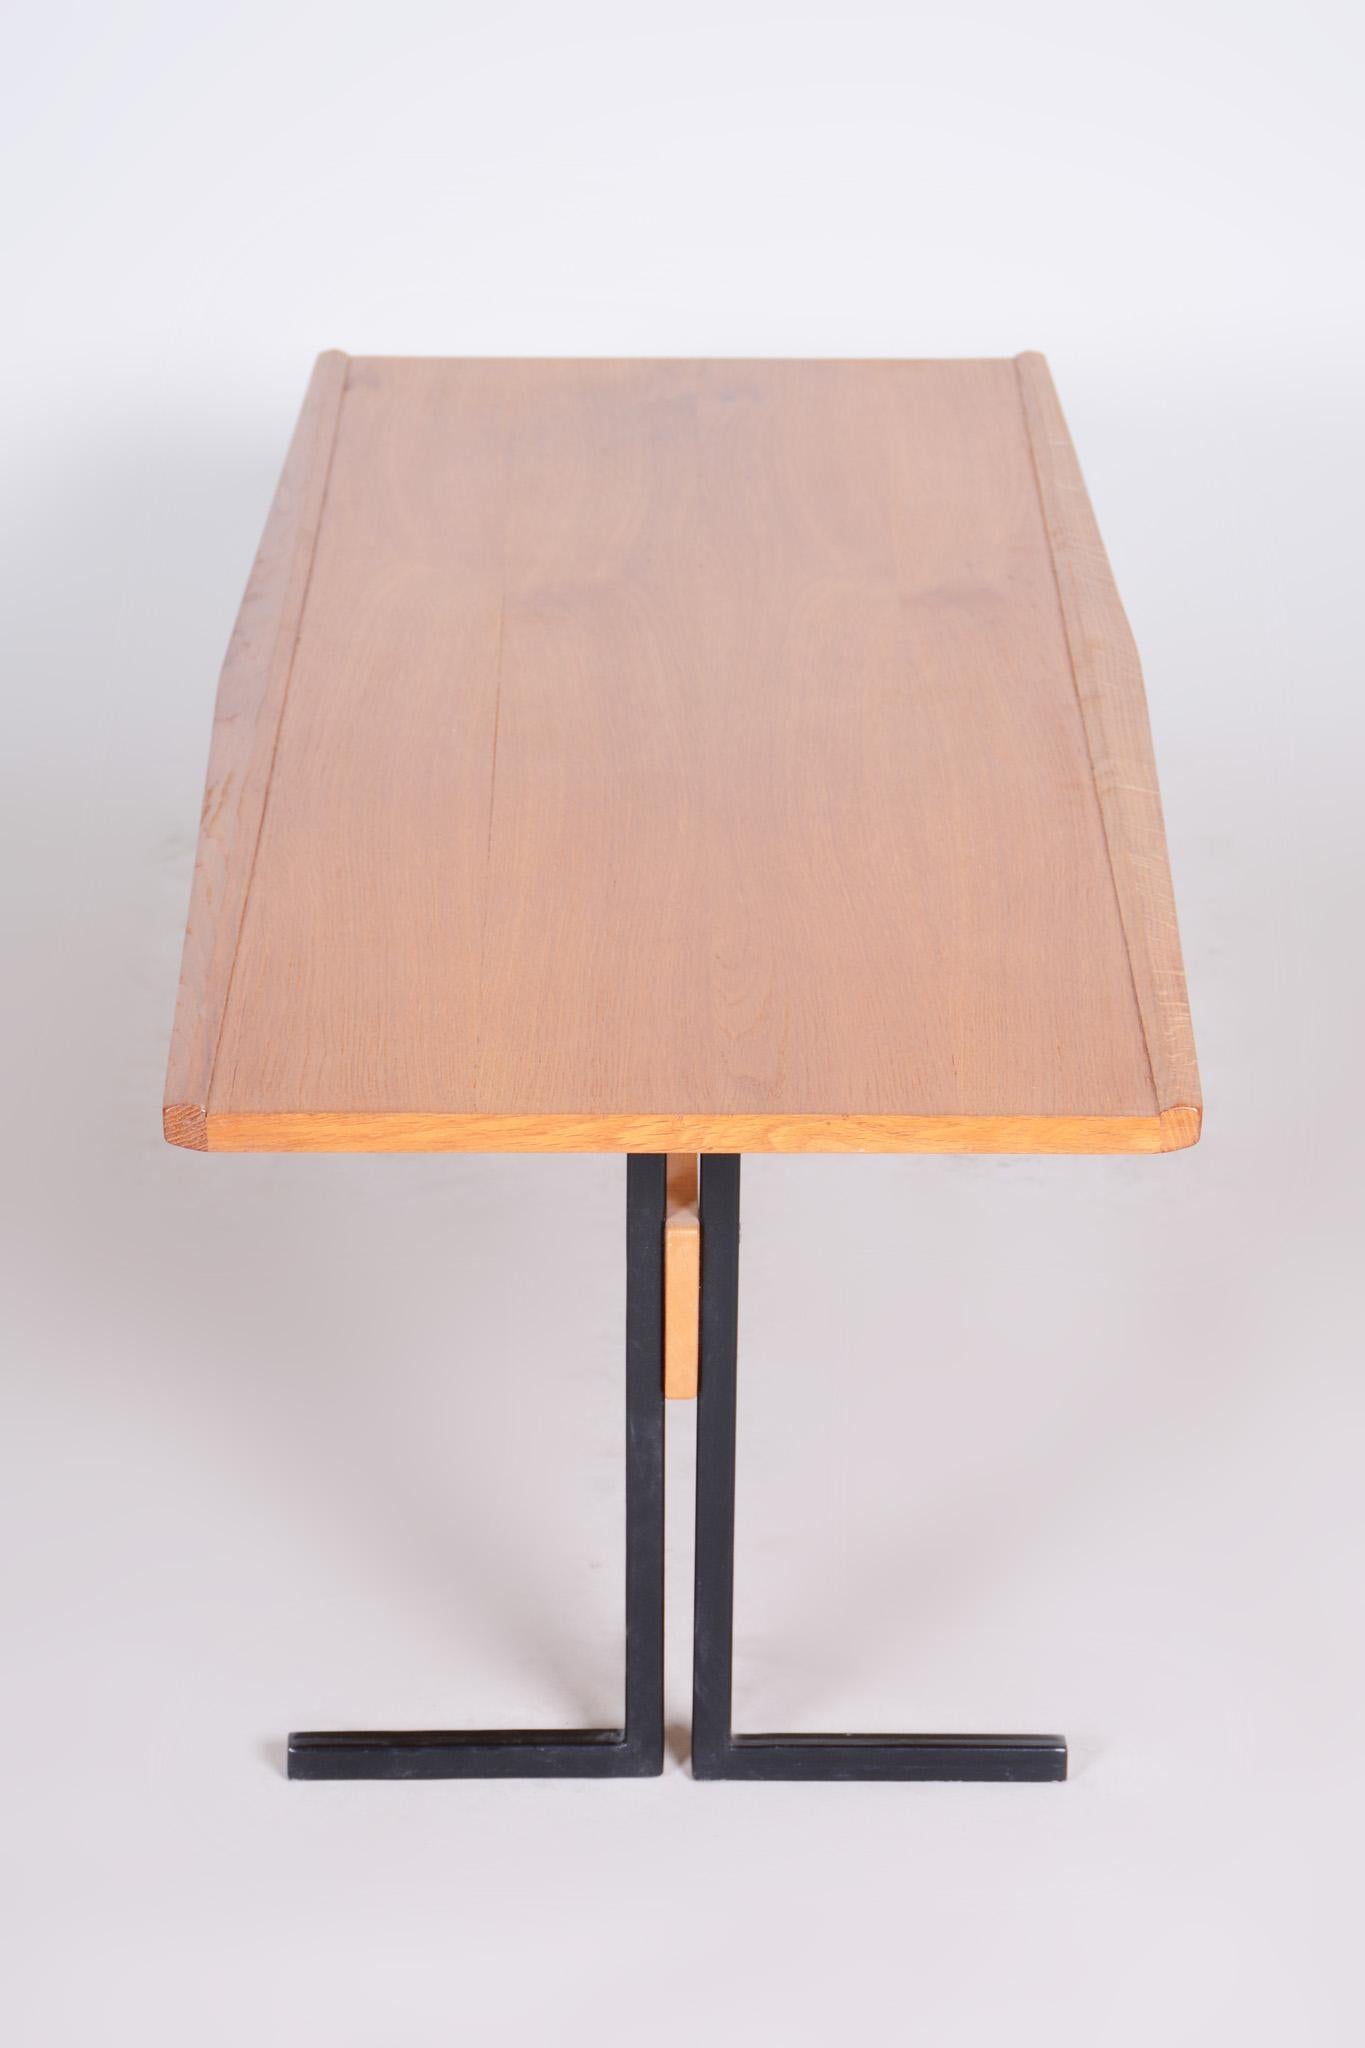 Original Rectangular Ash and Steel Table, Czech Mid-Century Modern, 1960s For Sale 4